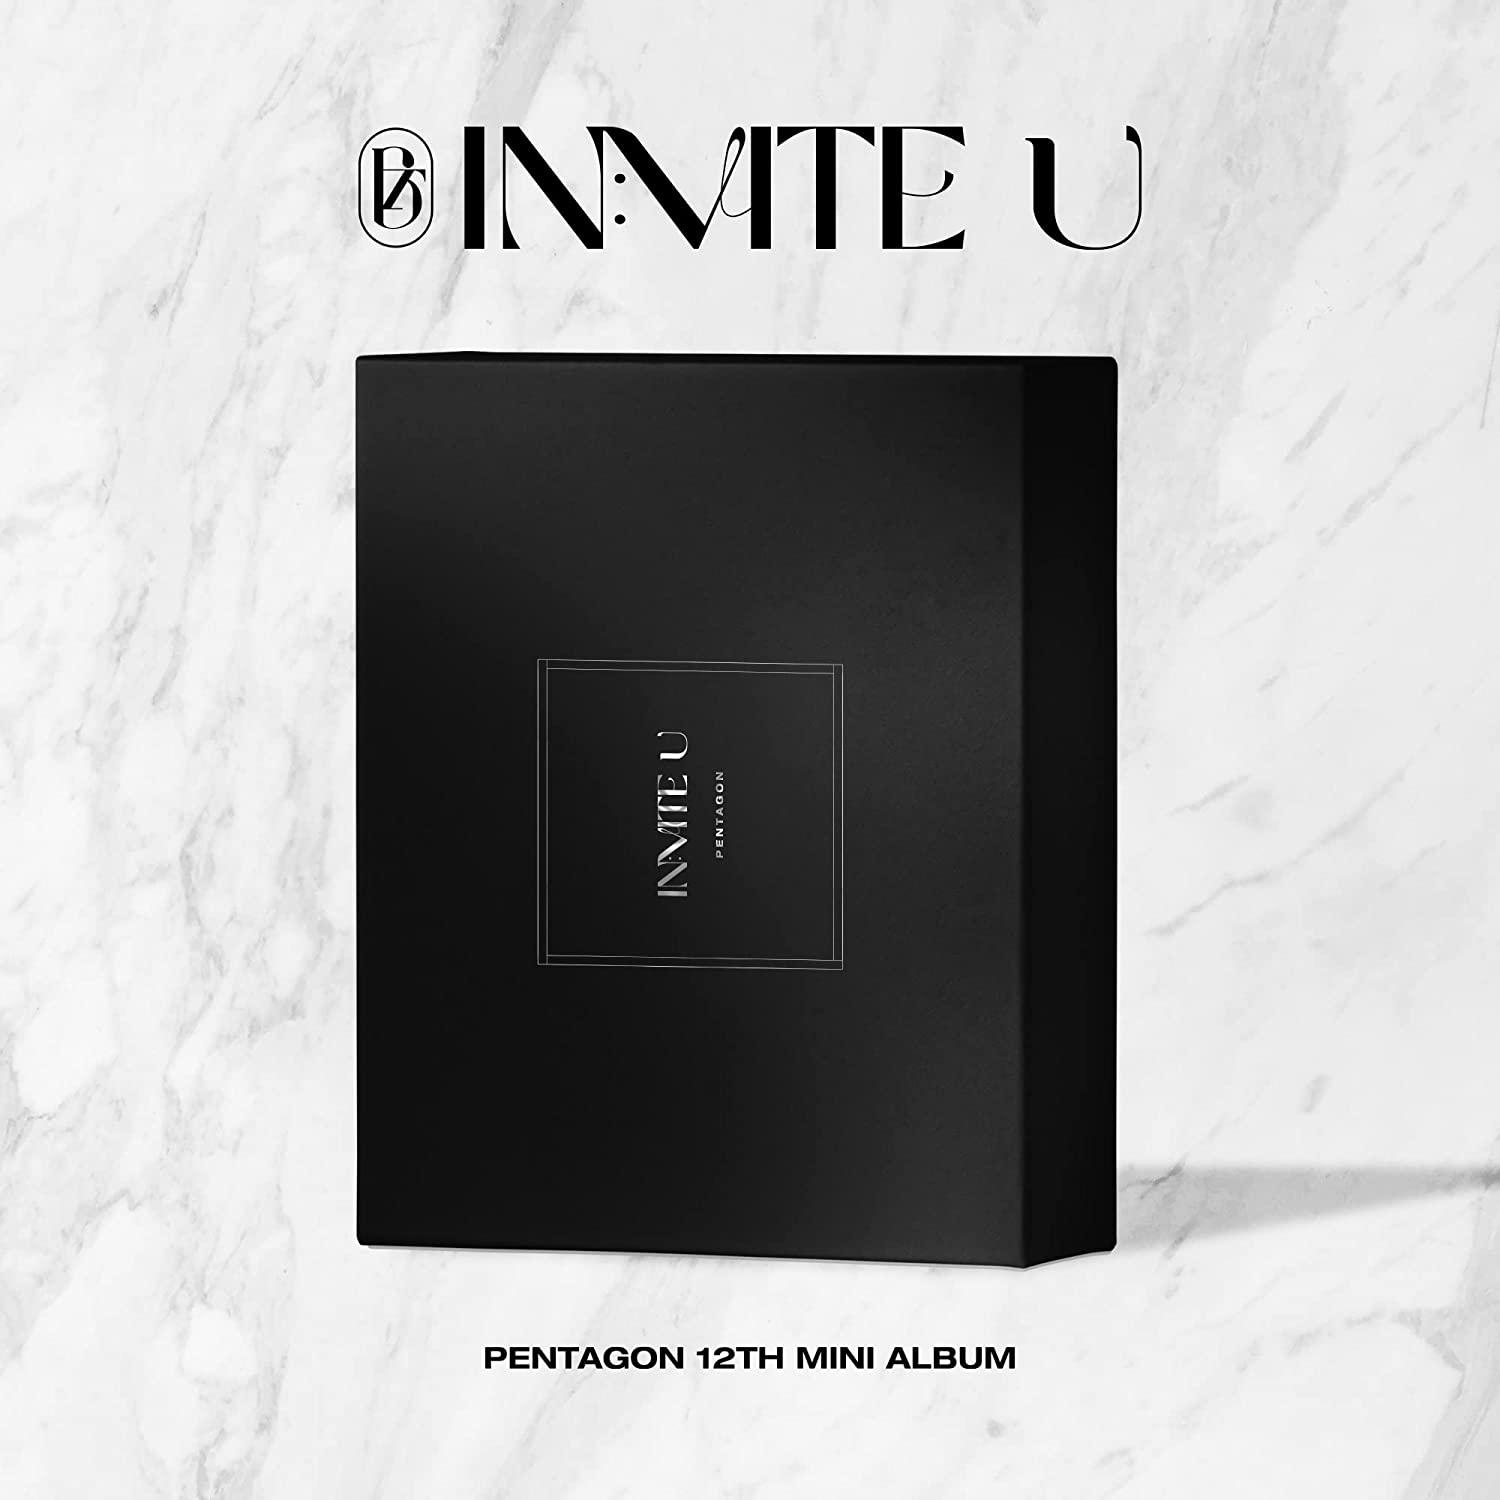 Pentagon (CD) - U - Invite